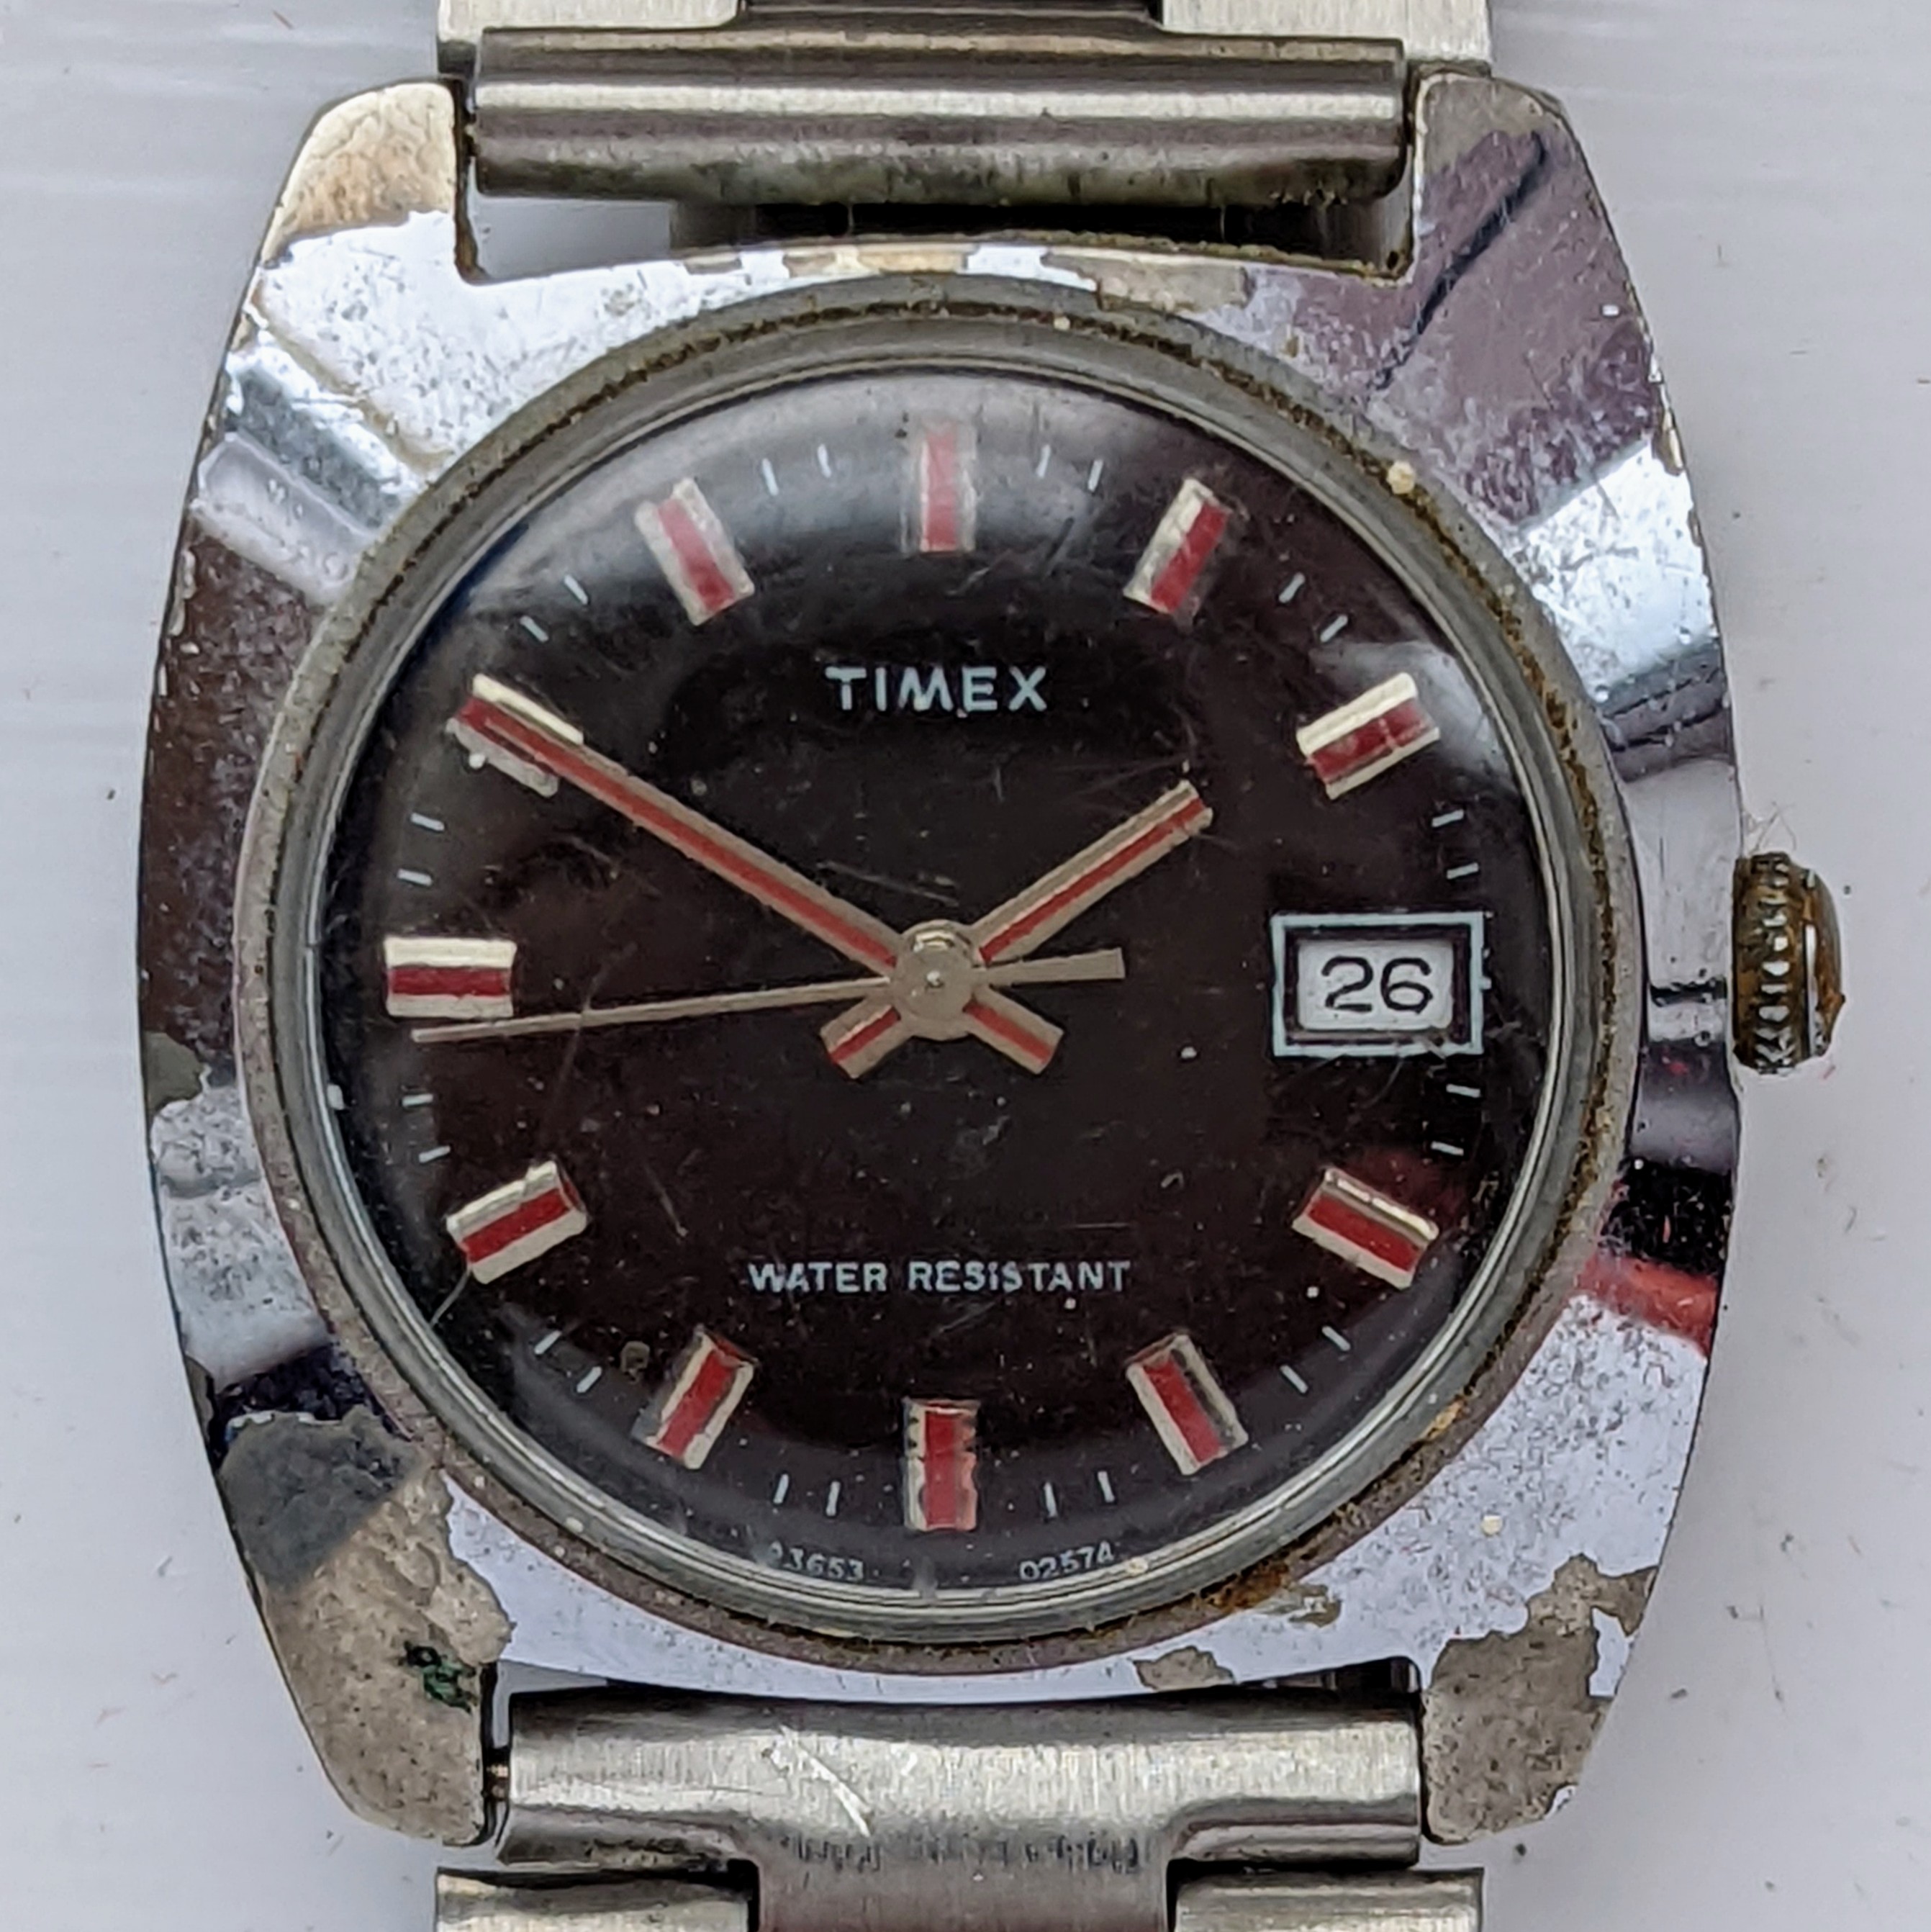 Timex Sprite 23653 02574 [1974]